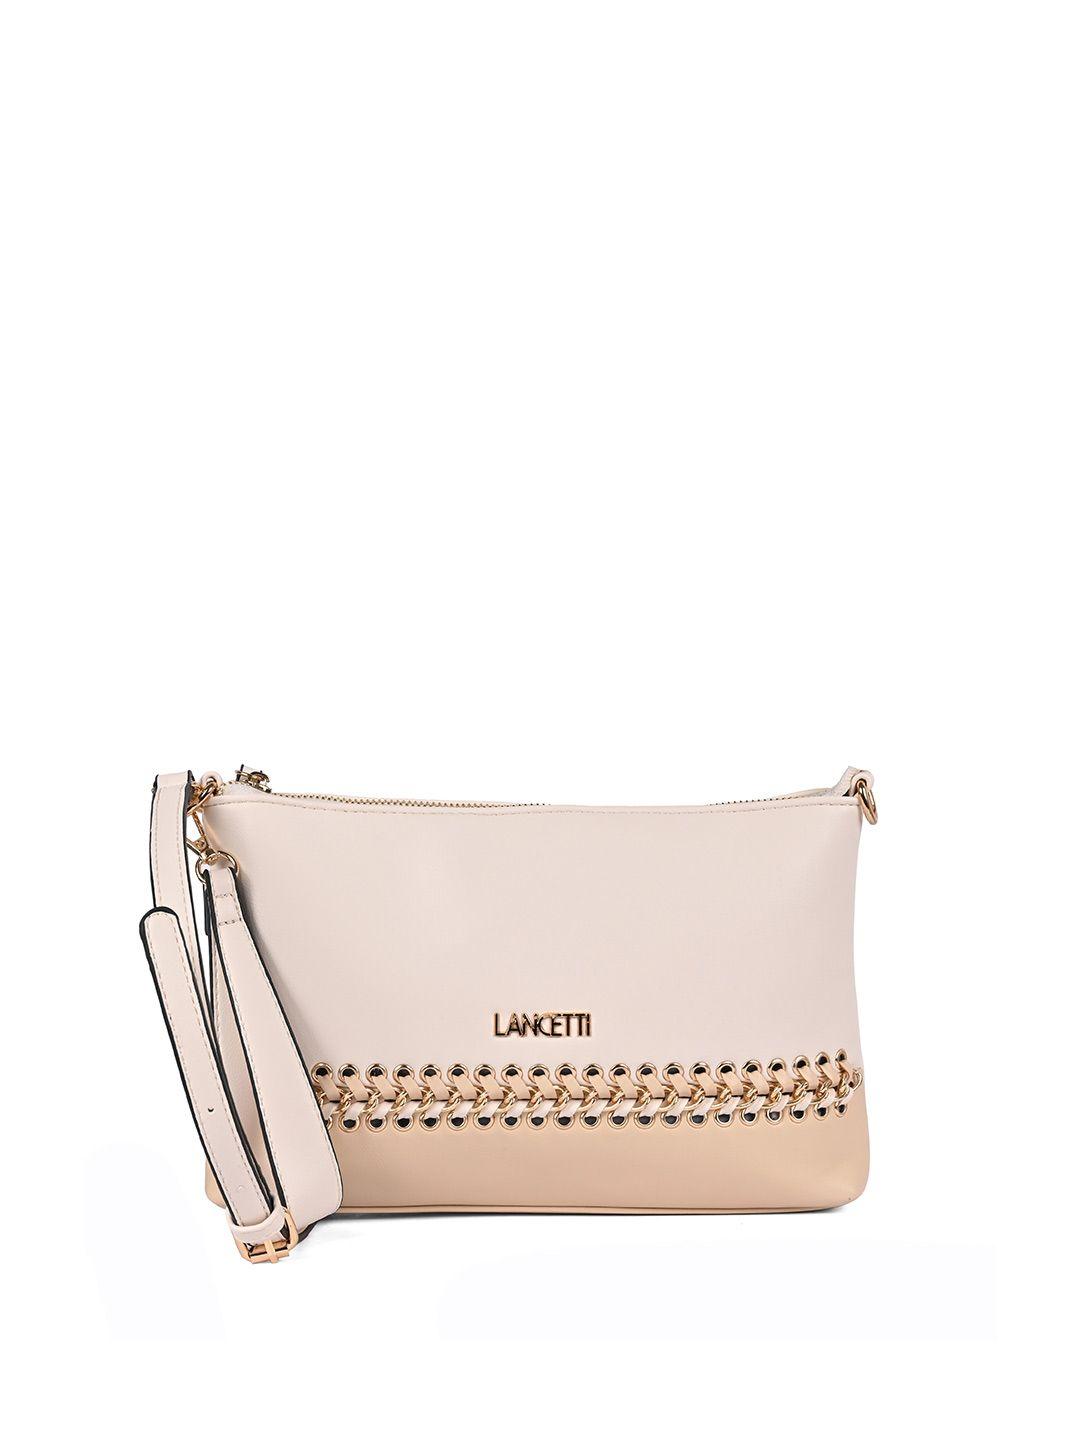 lancetti off white & peach-coloured purse clutch